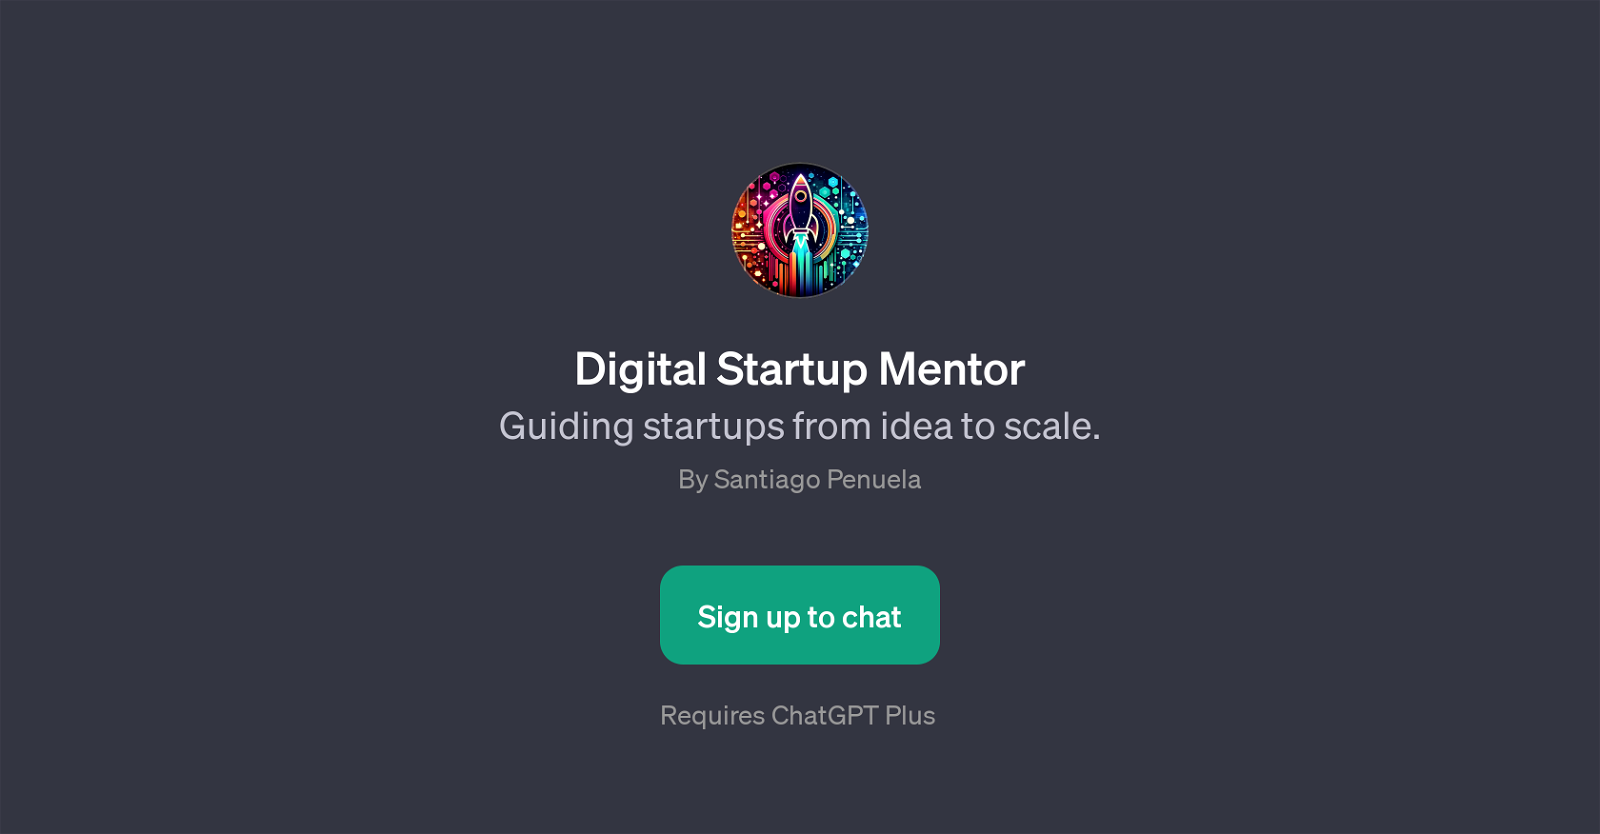 Digital Startup Mentor website